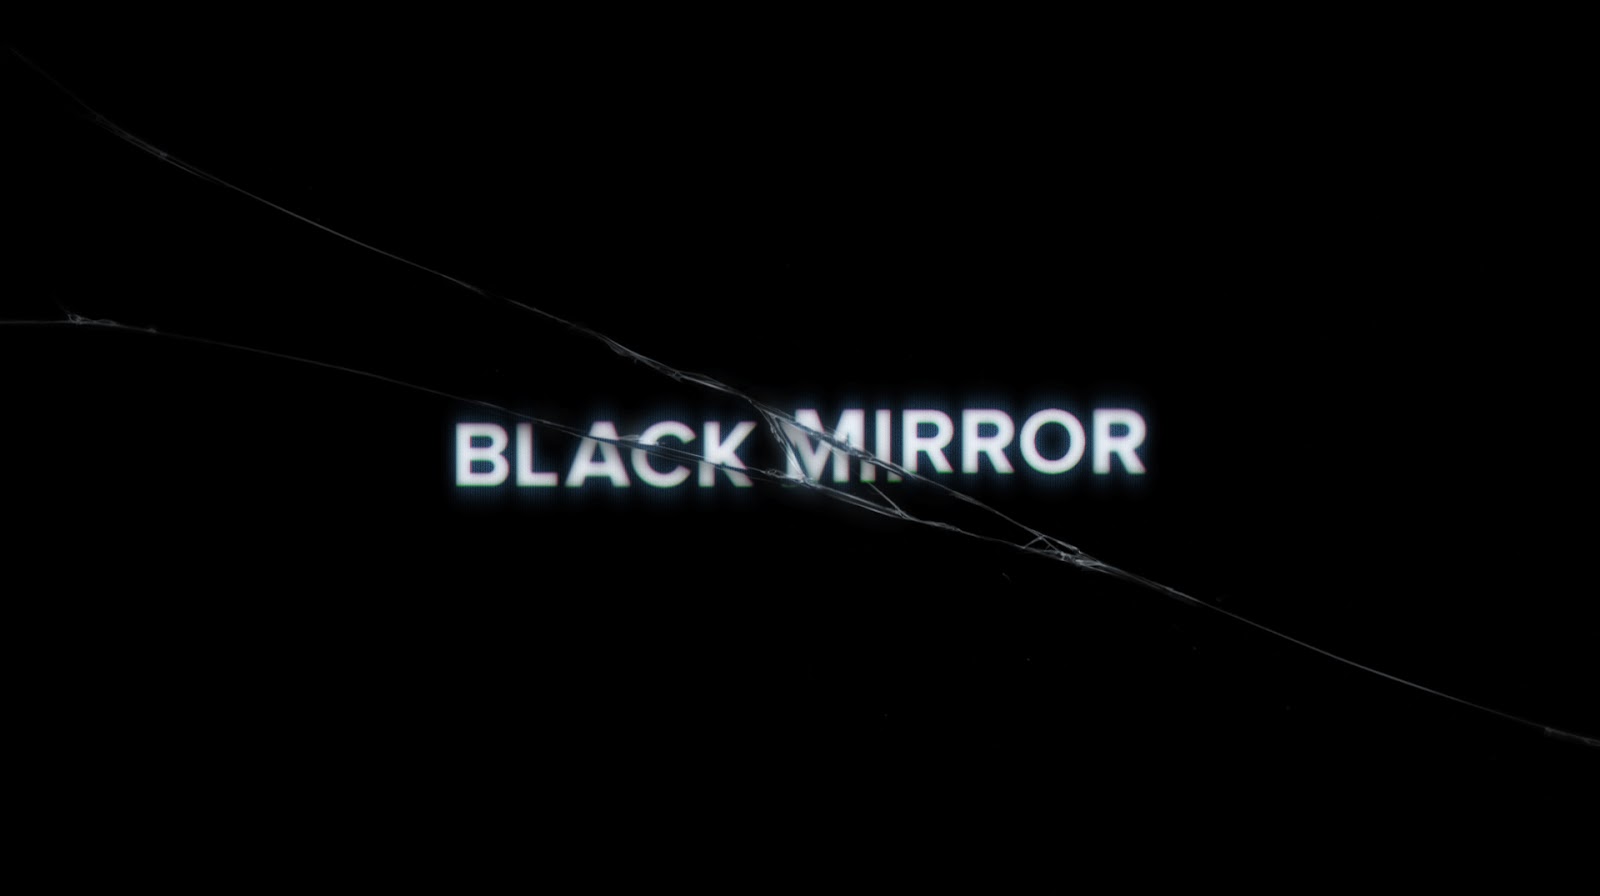 096-black-mirror-logo.jpg